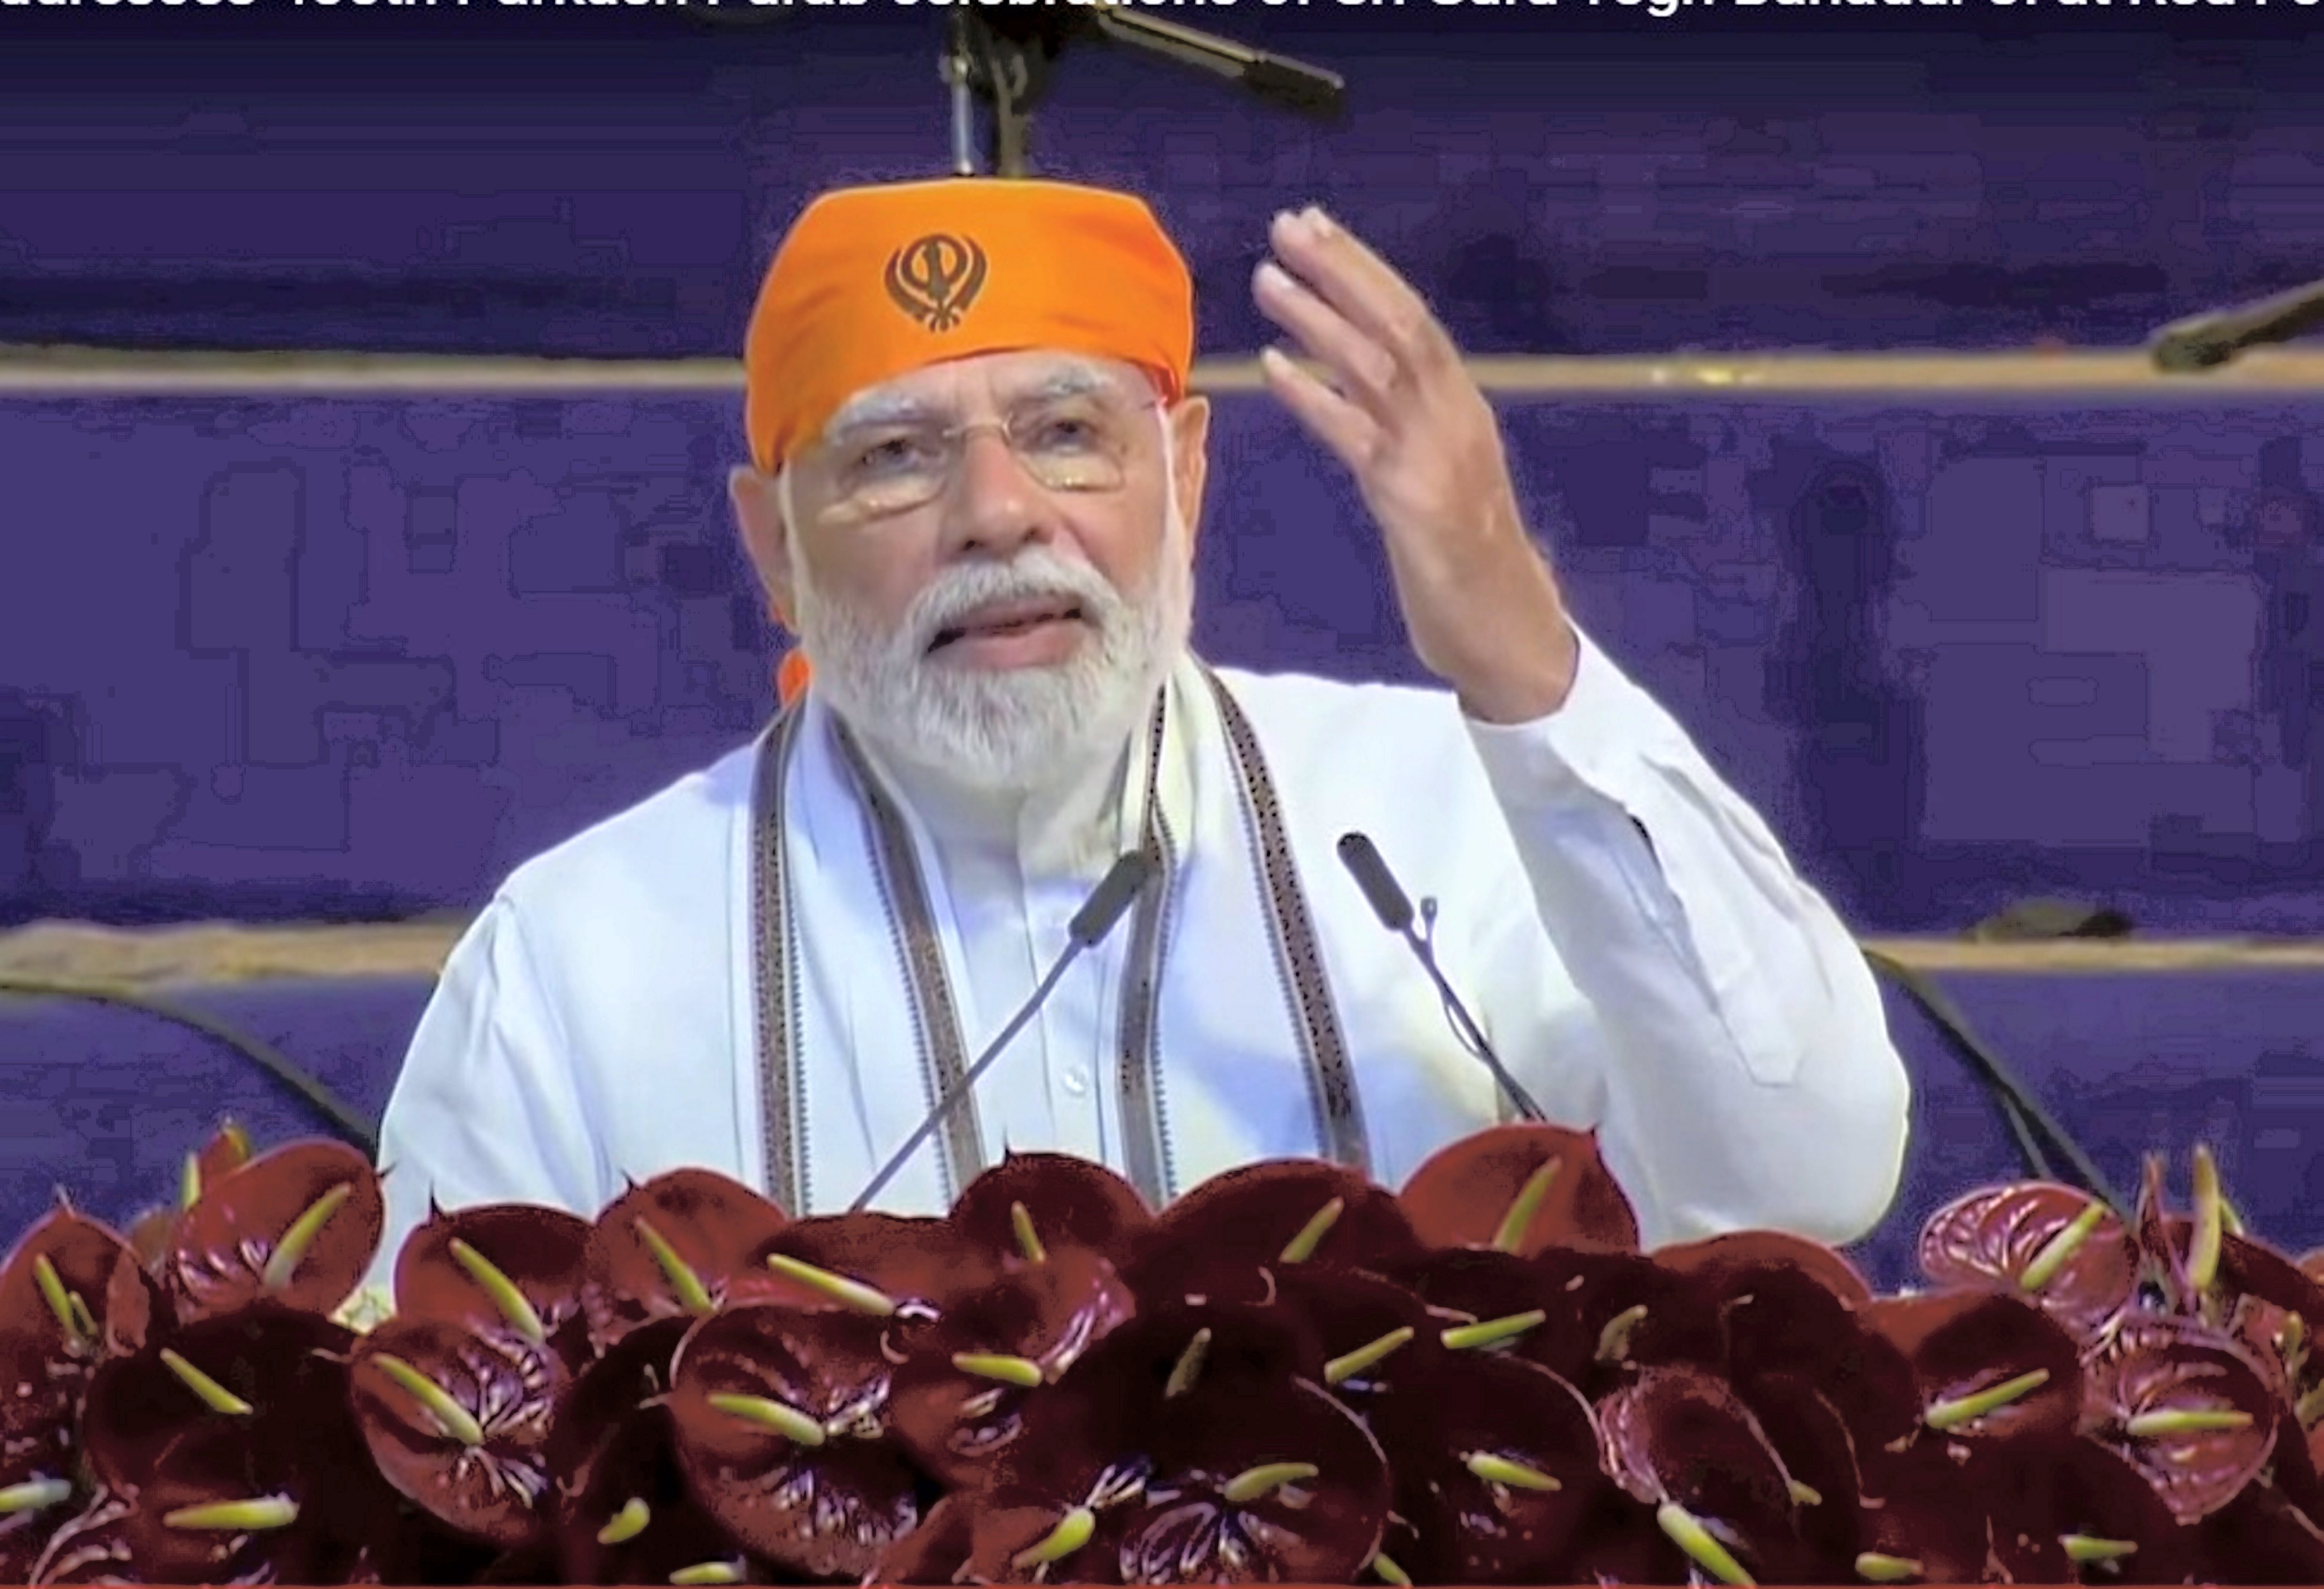 India following Sikh Gurus' path, says PM Modi